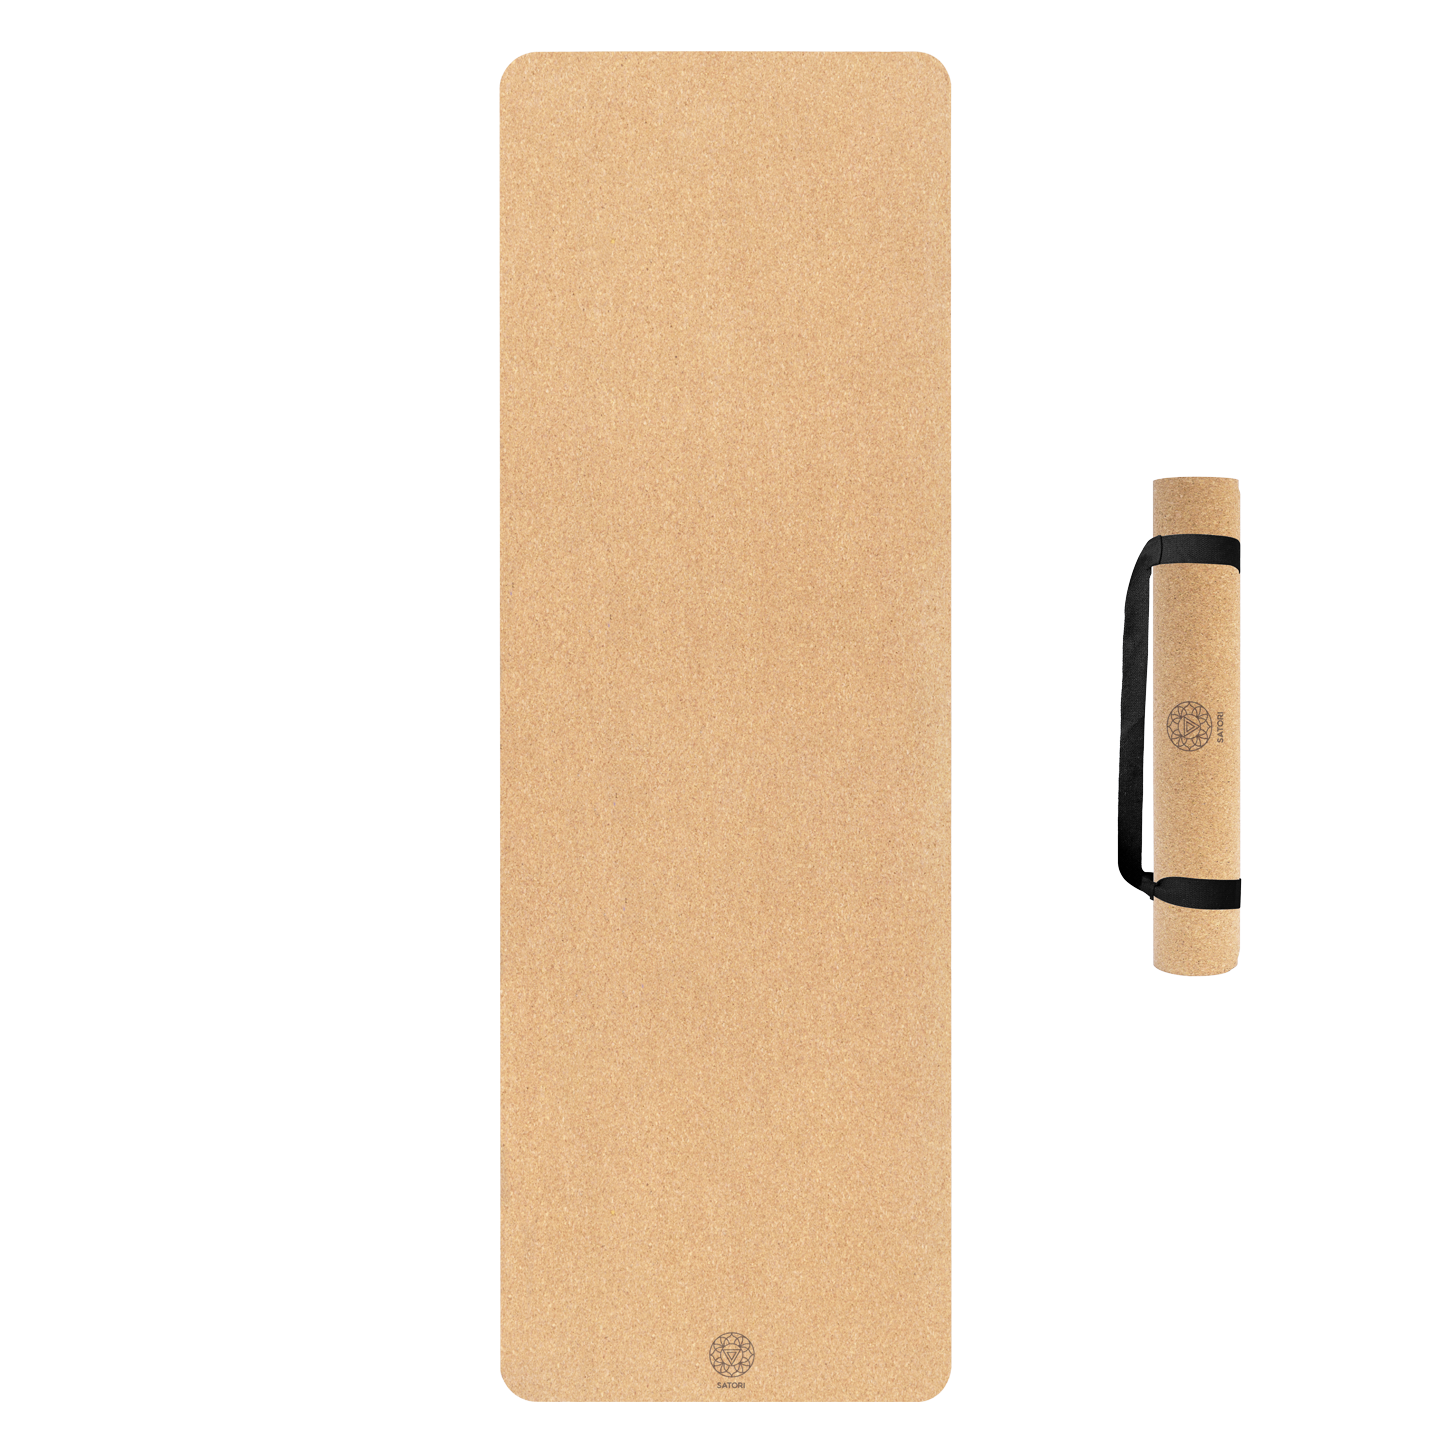 Cork Mat | Design Yoga Satori Concept Original